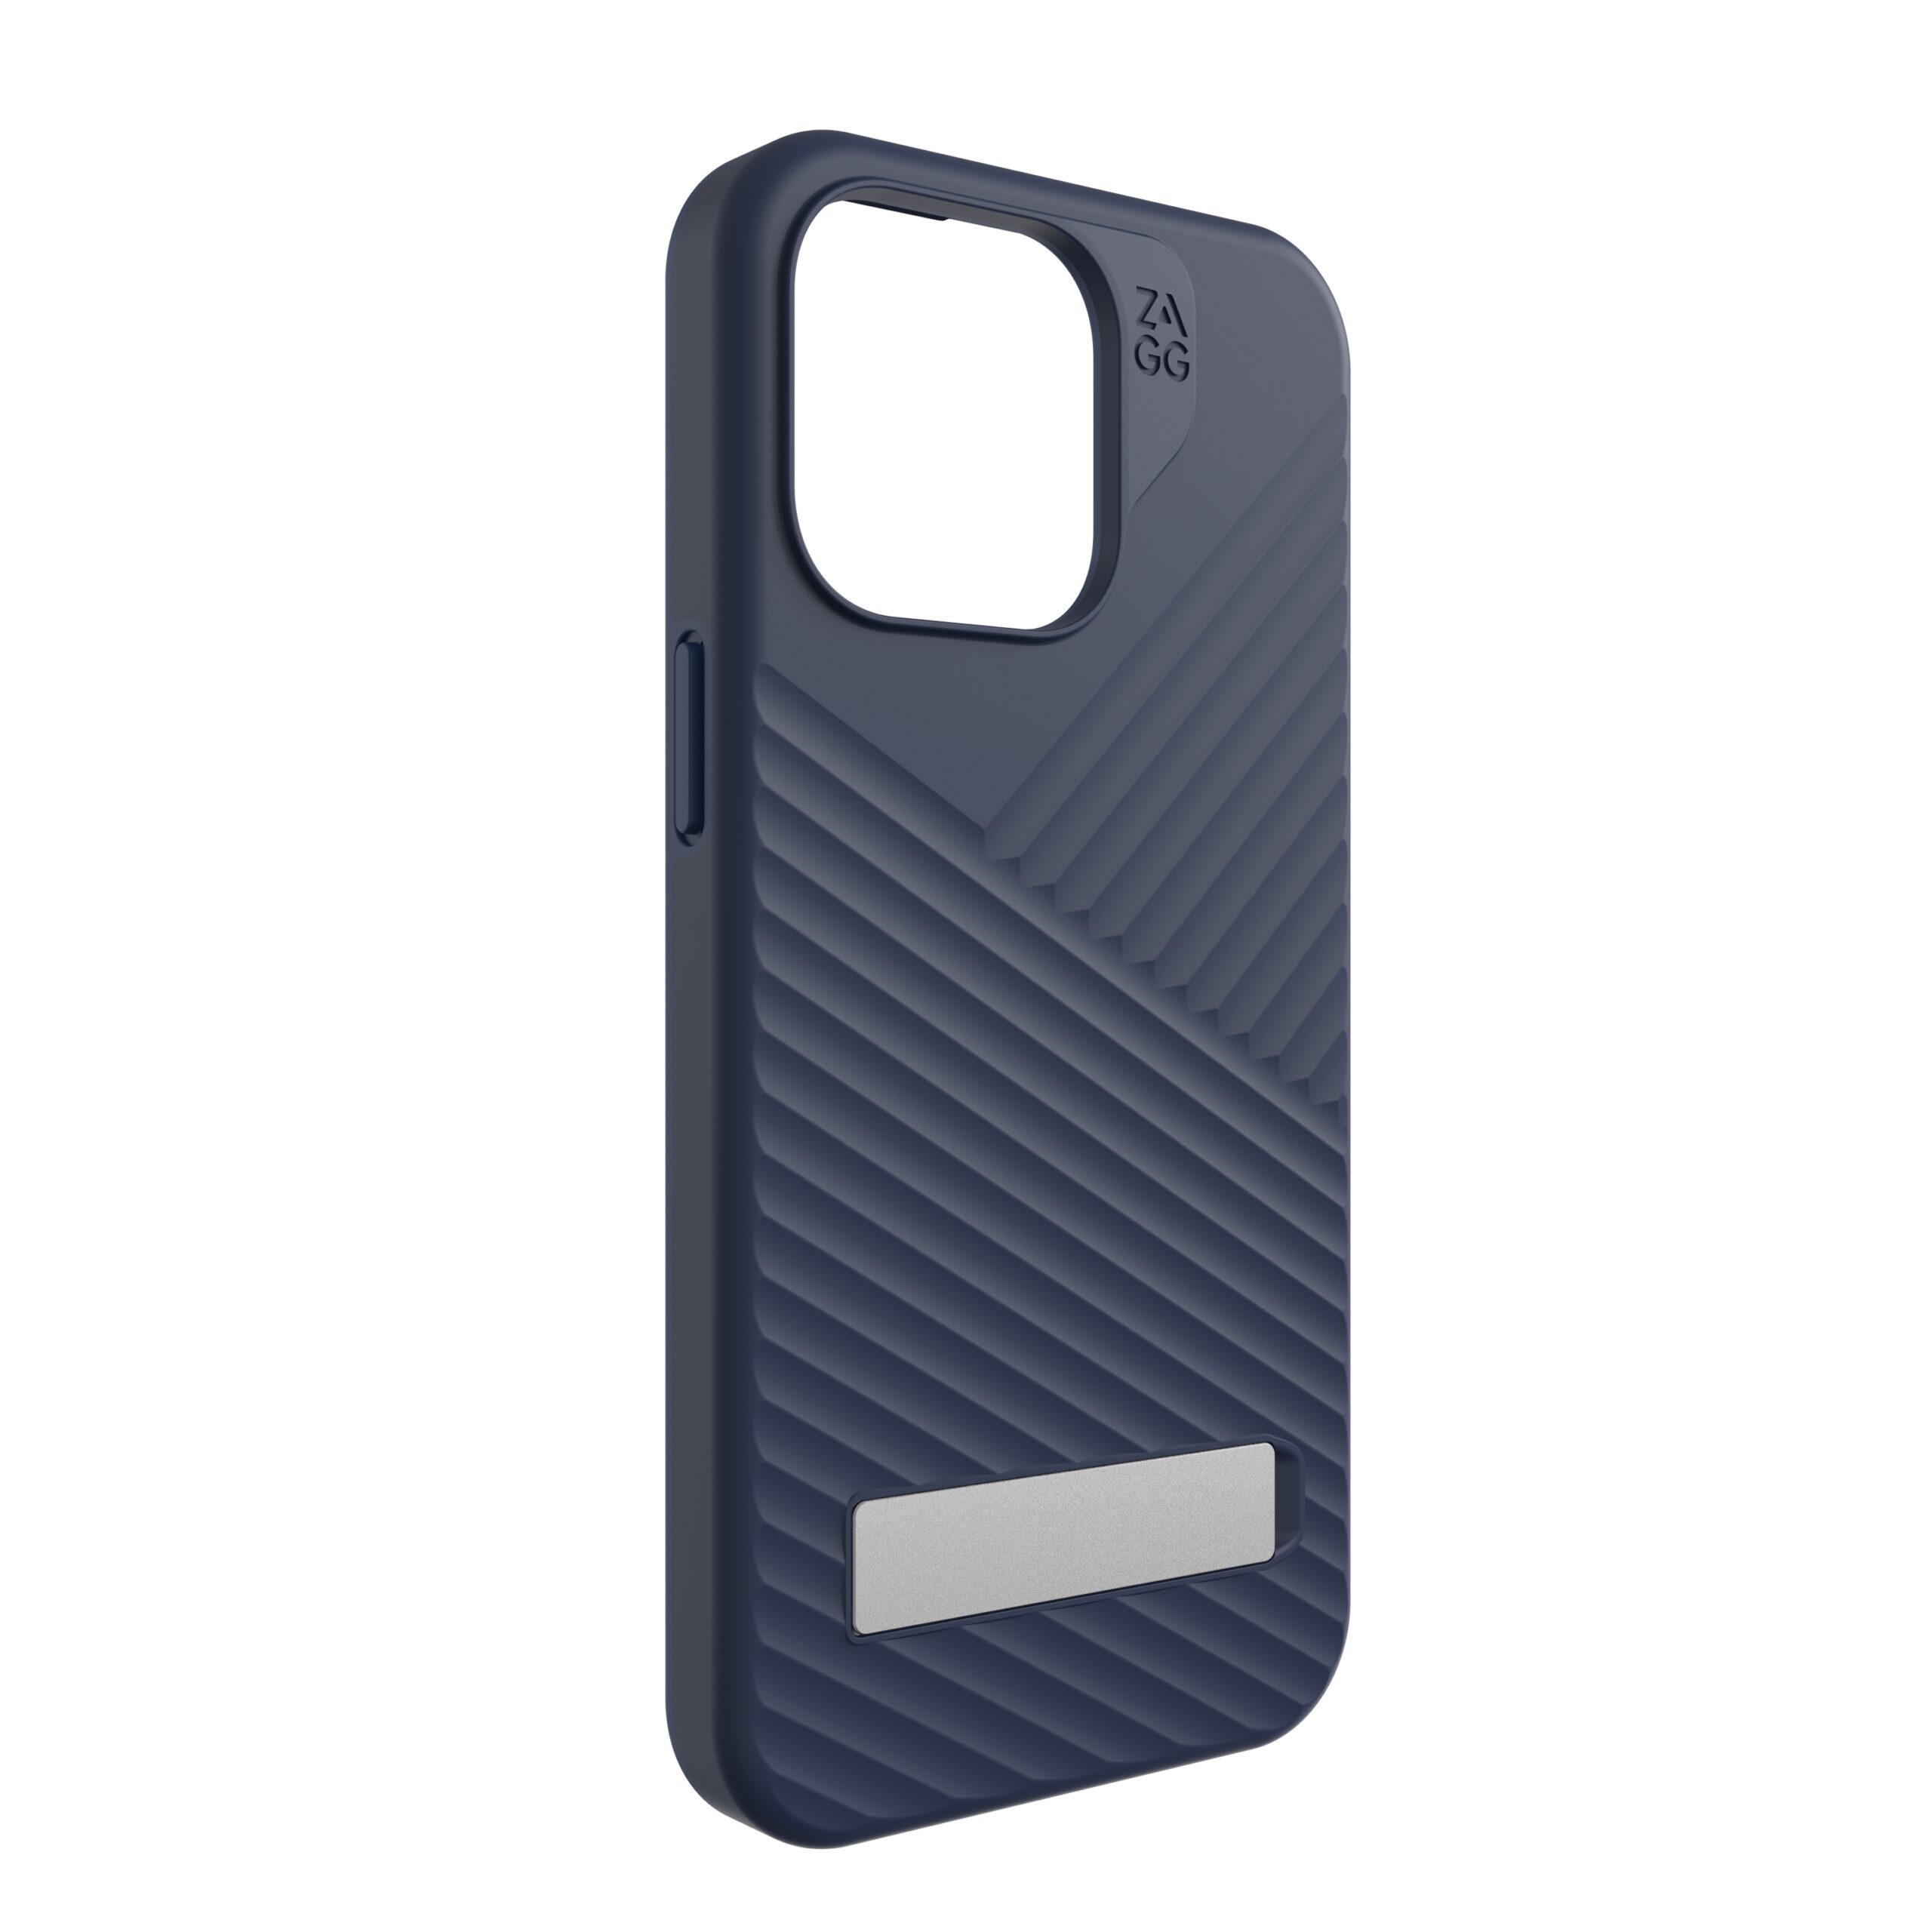 ZAGG รุ่น Denali Snap with Kick Stand - เคส iPhone 15 Pro Max - สี Navy